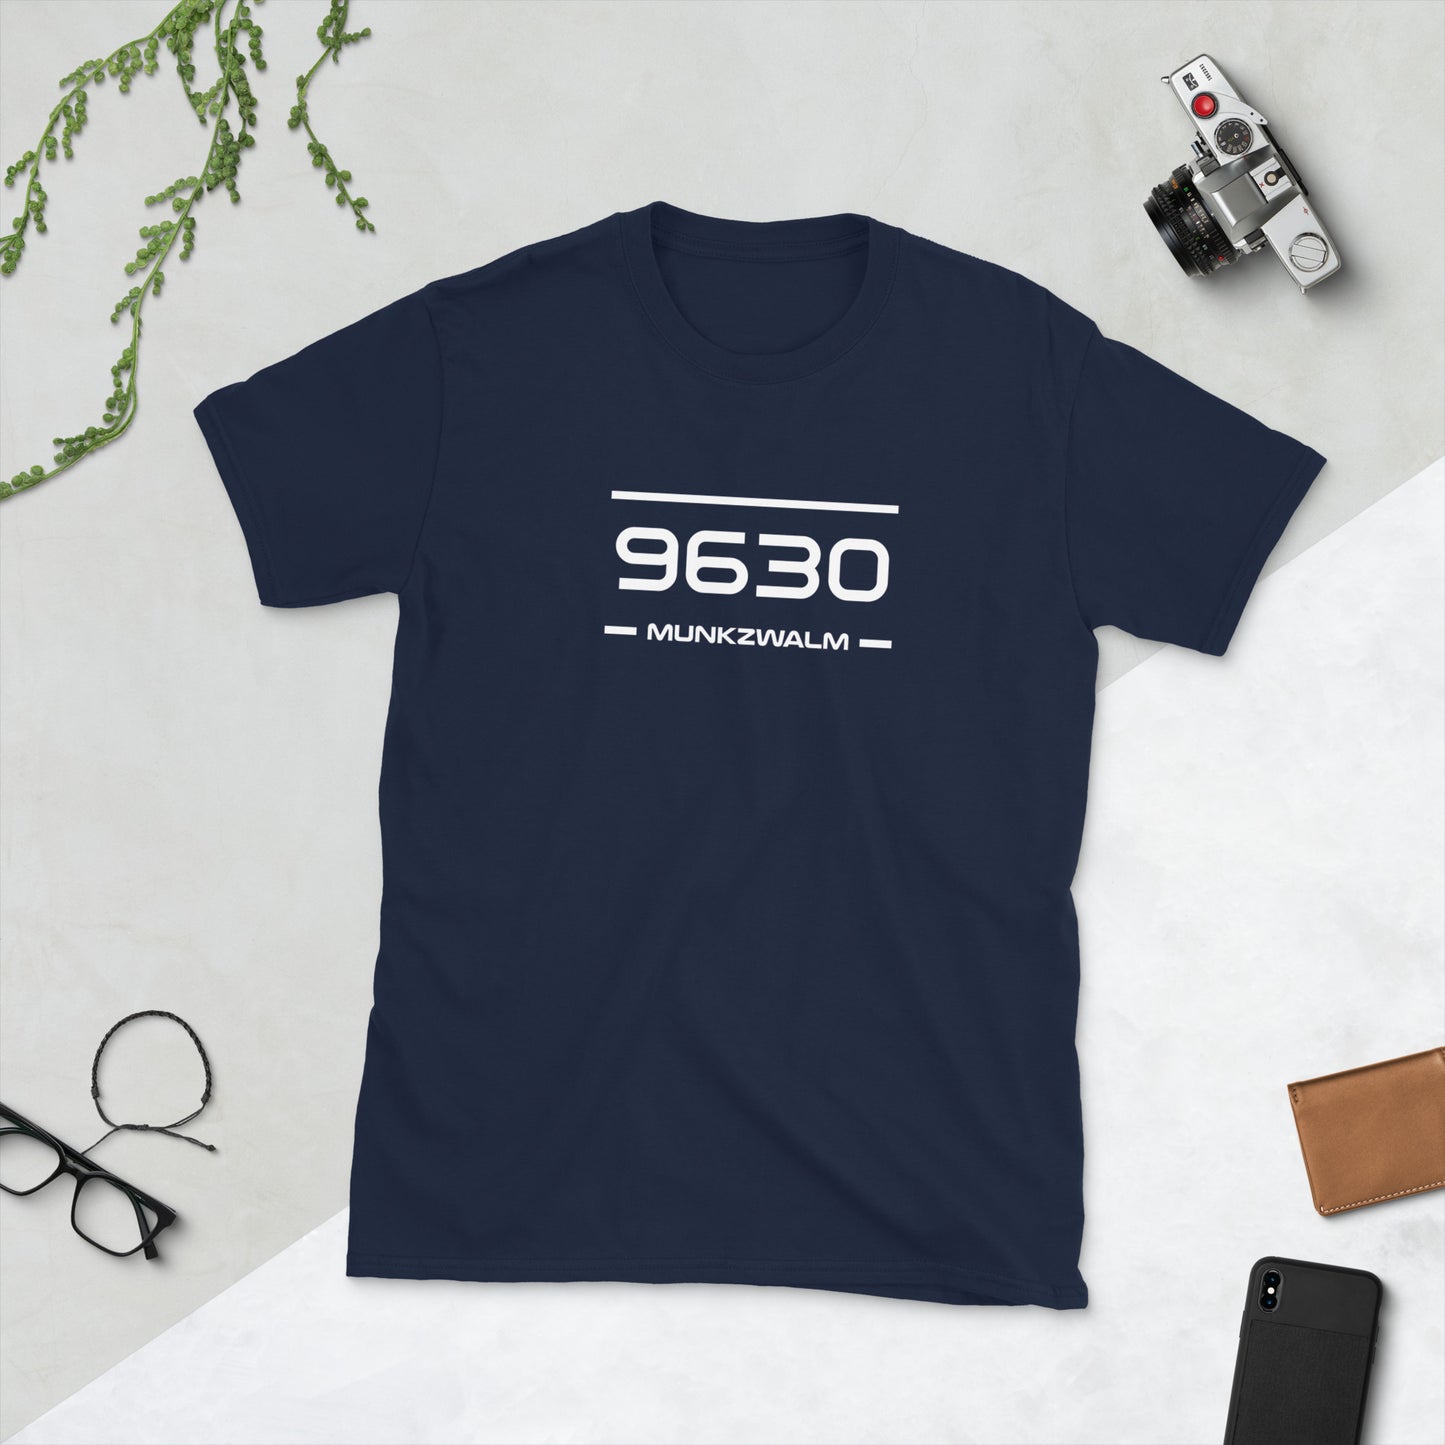 T-Shirt - 9630 - Munkzwalm